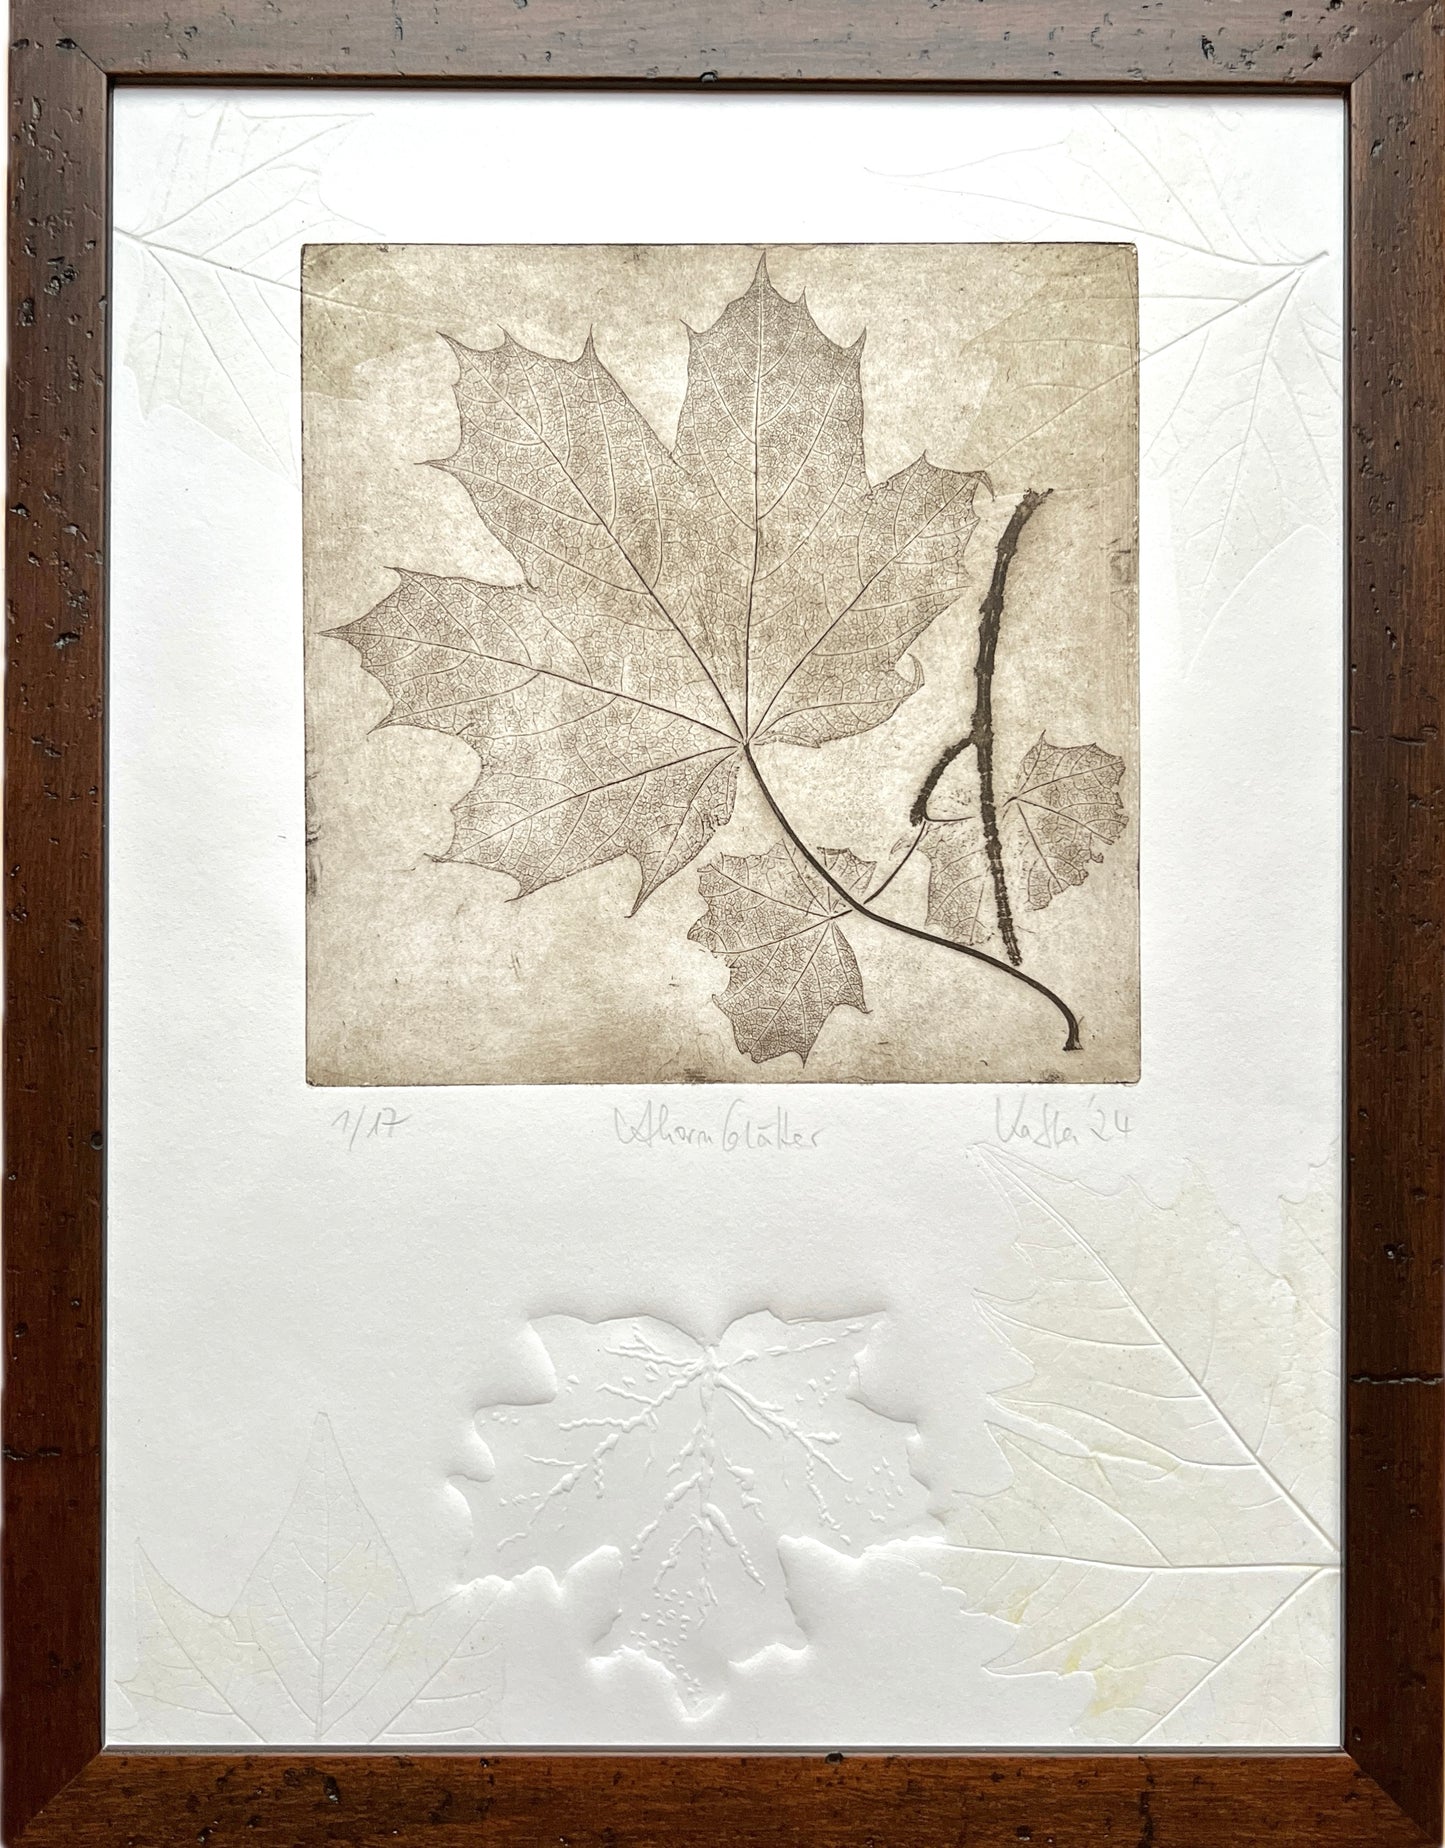 ARCE impresión original grabado vernis mou con relieve 30x40 cm